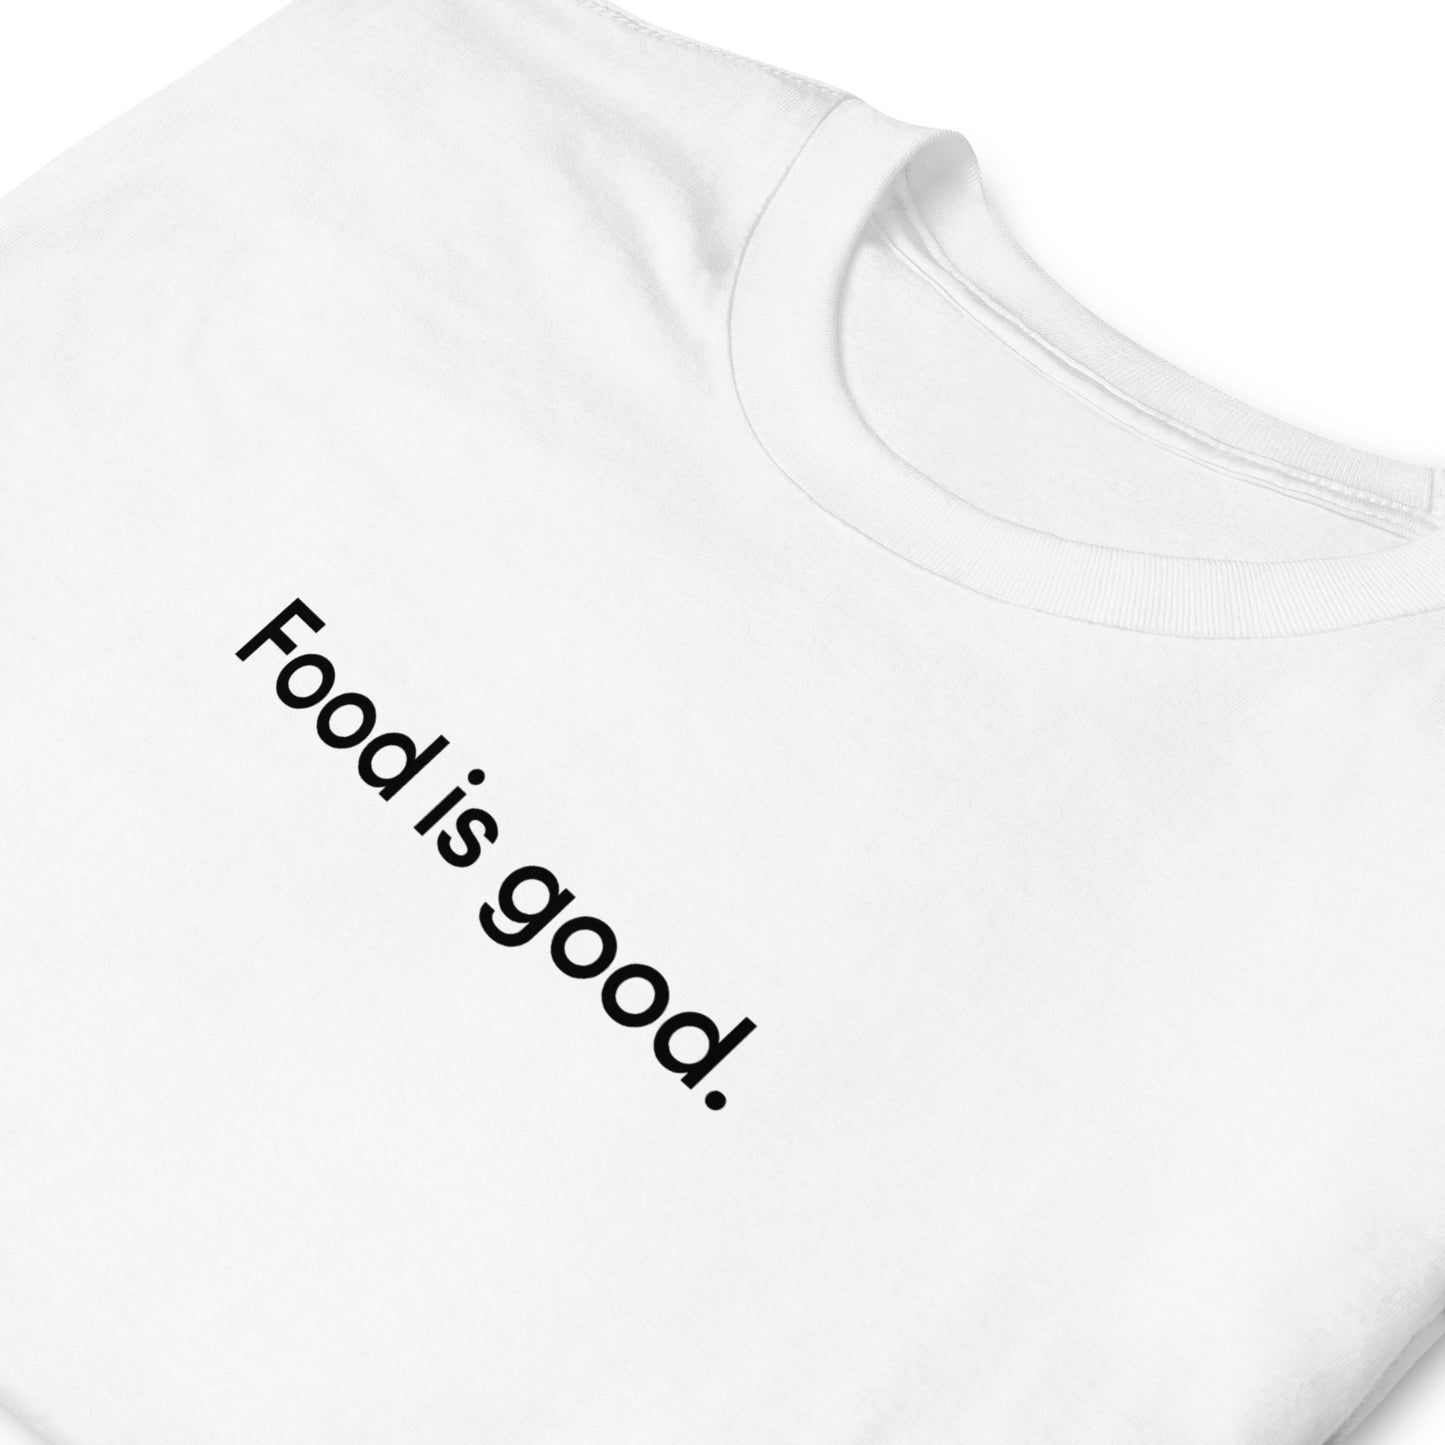 Food is good. | Short-Sleeve Unisex T-Shirt